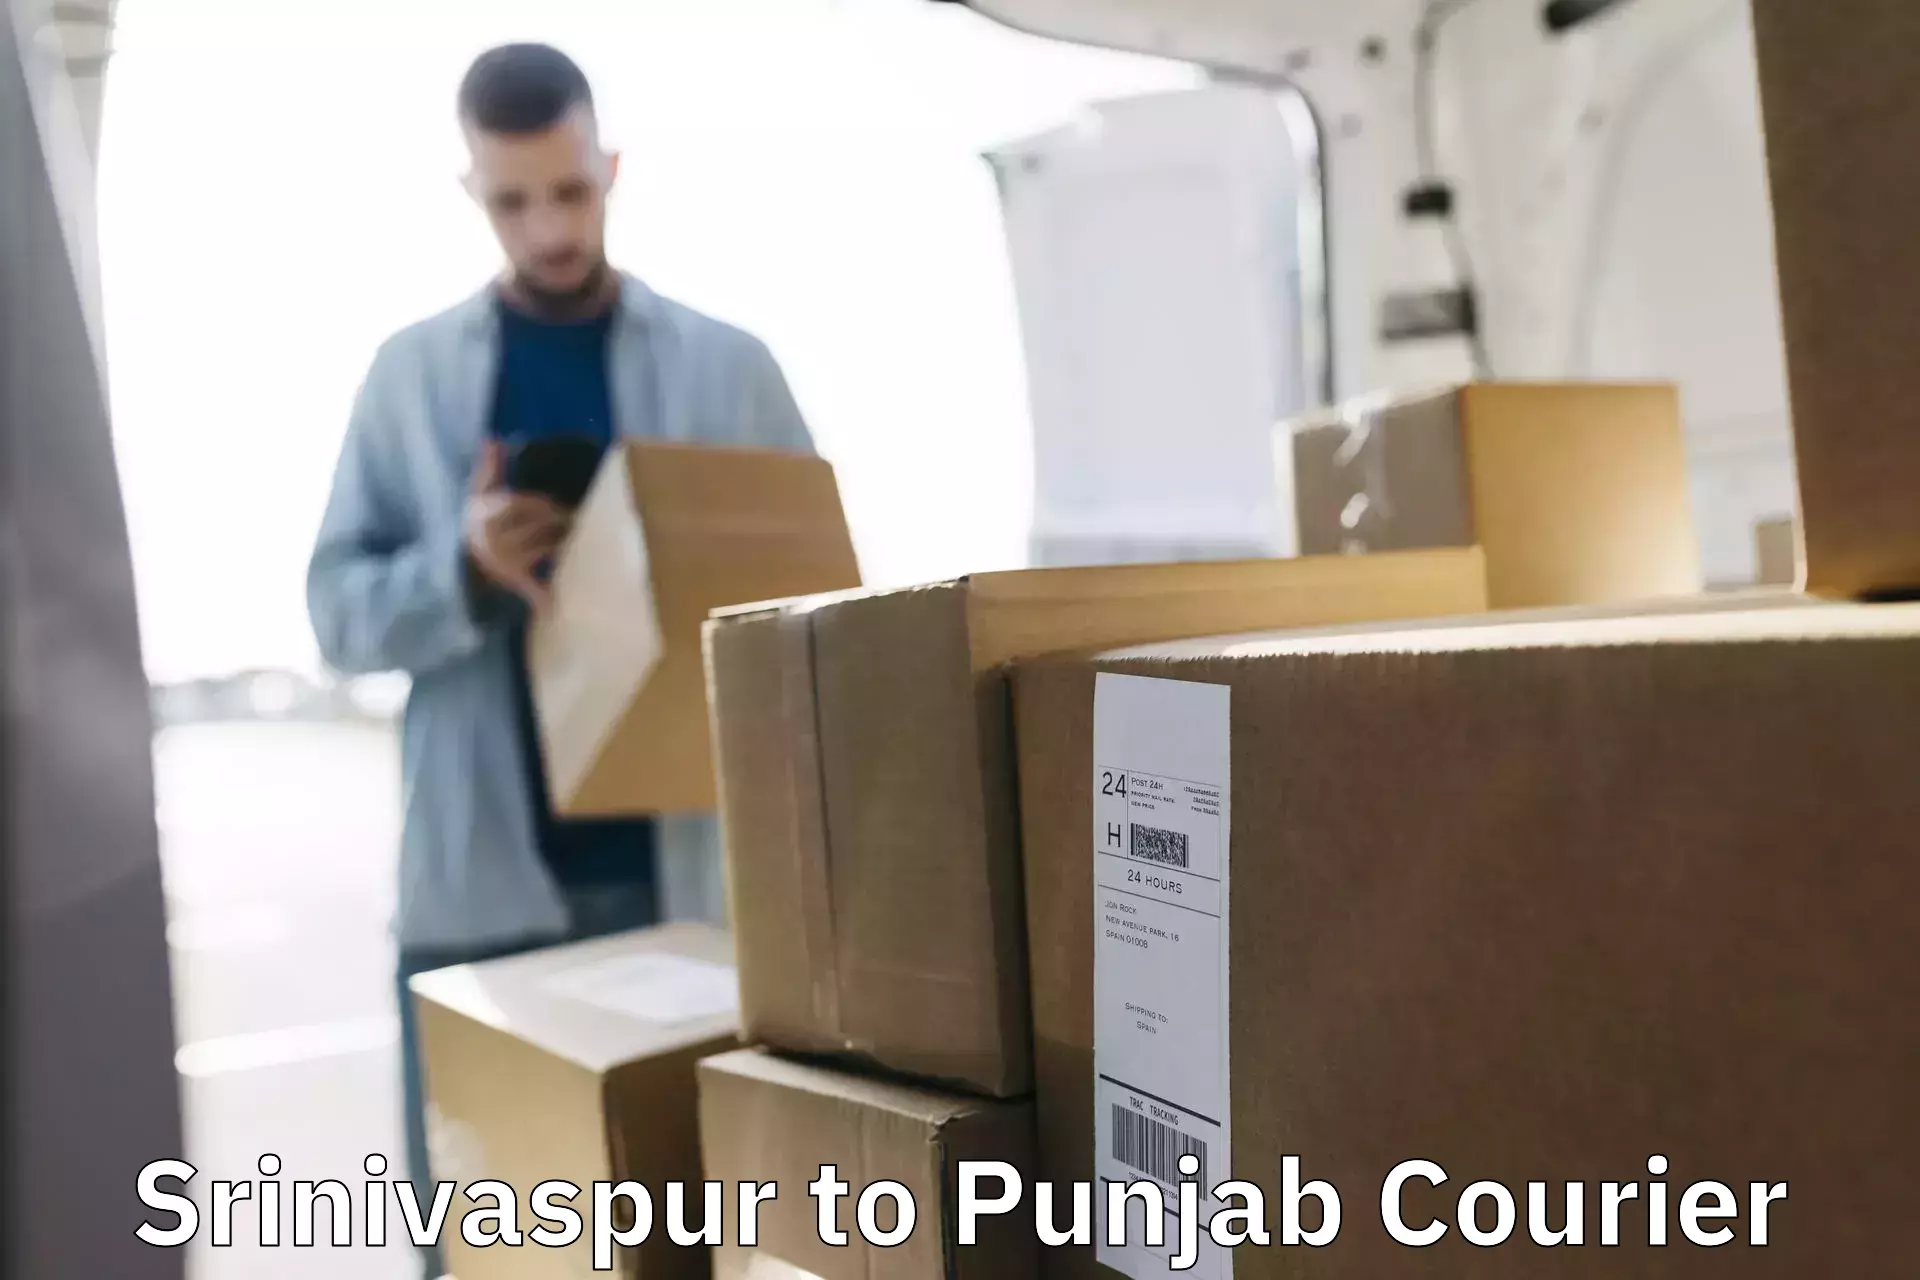 Courier service innovation Srinivaspur to Moga